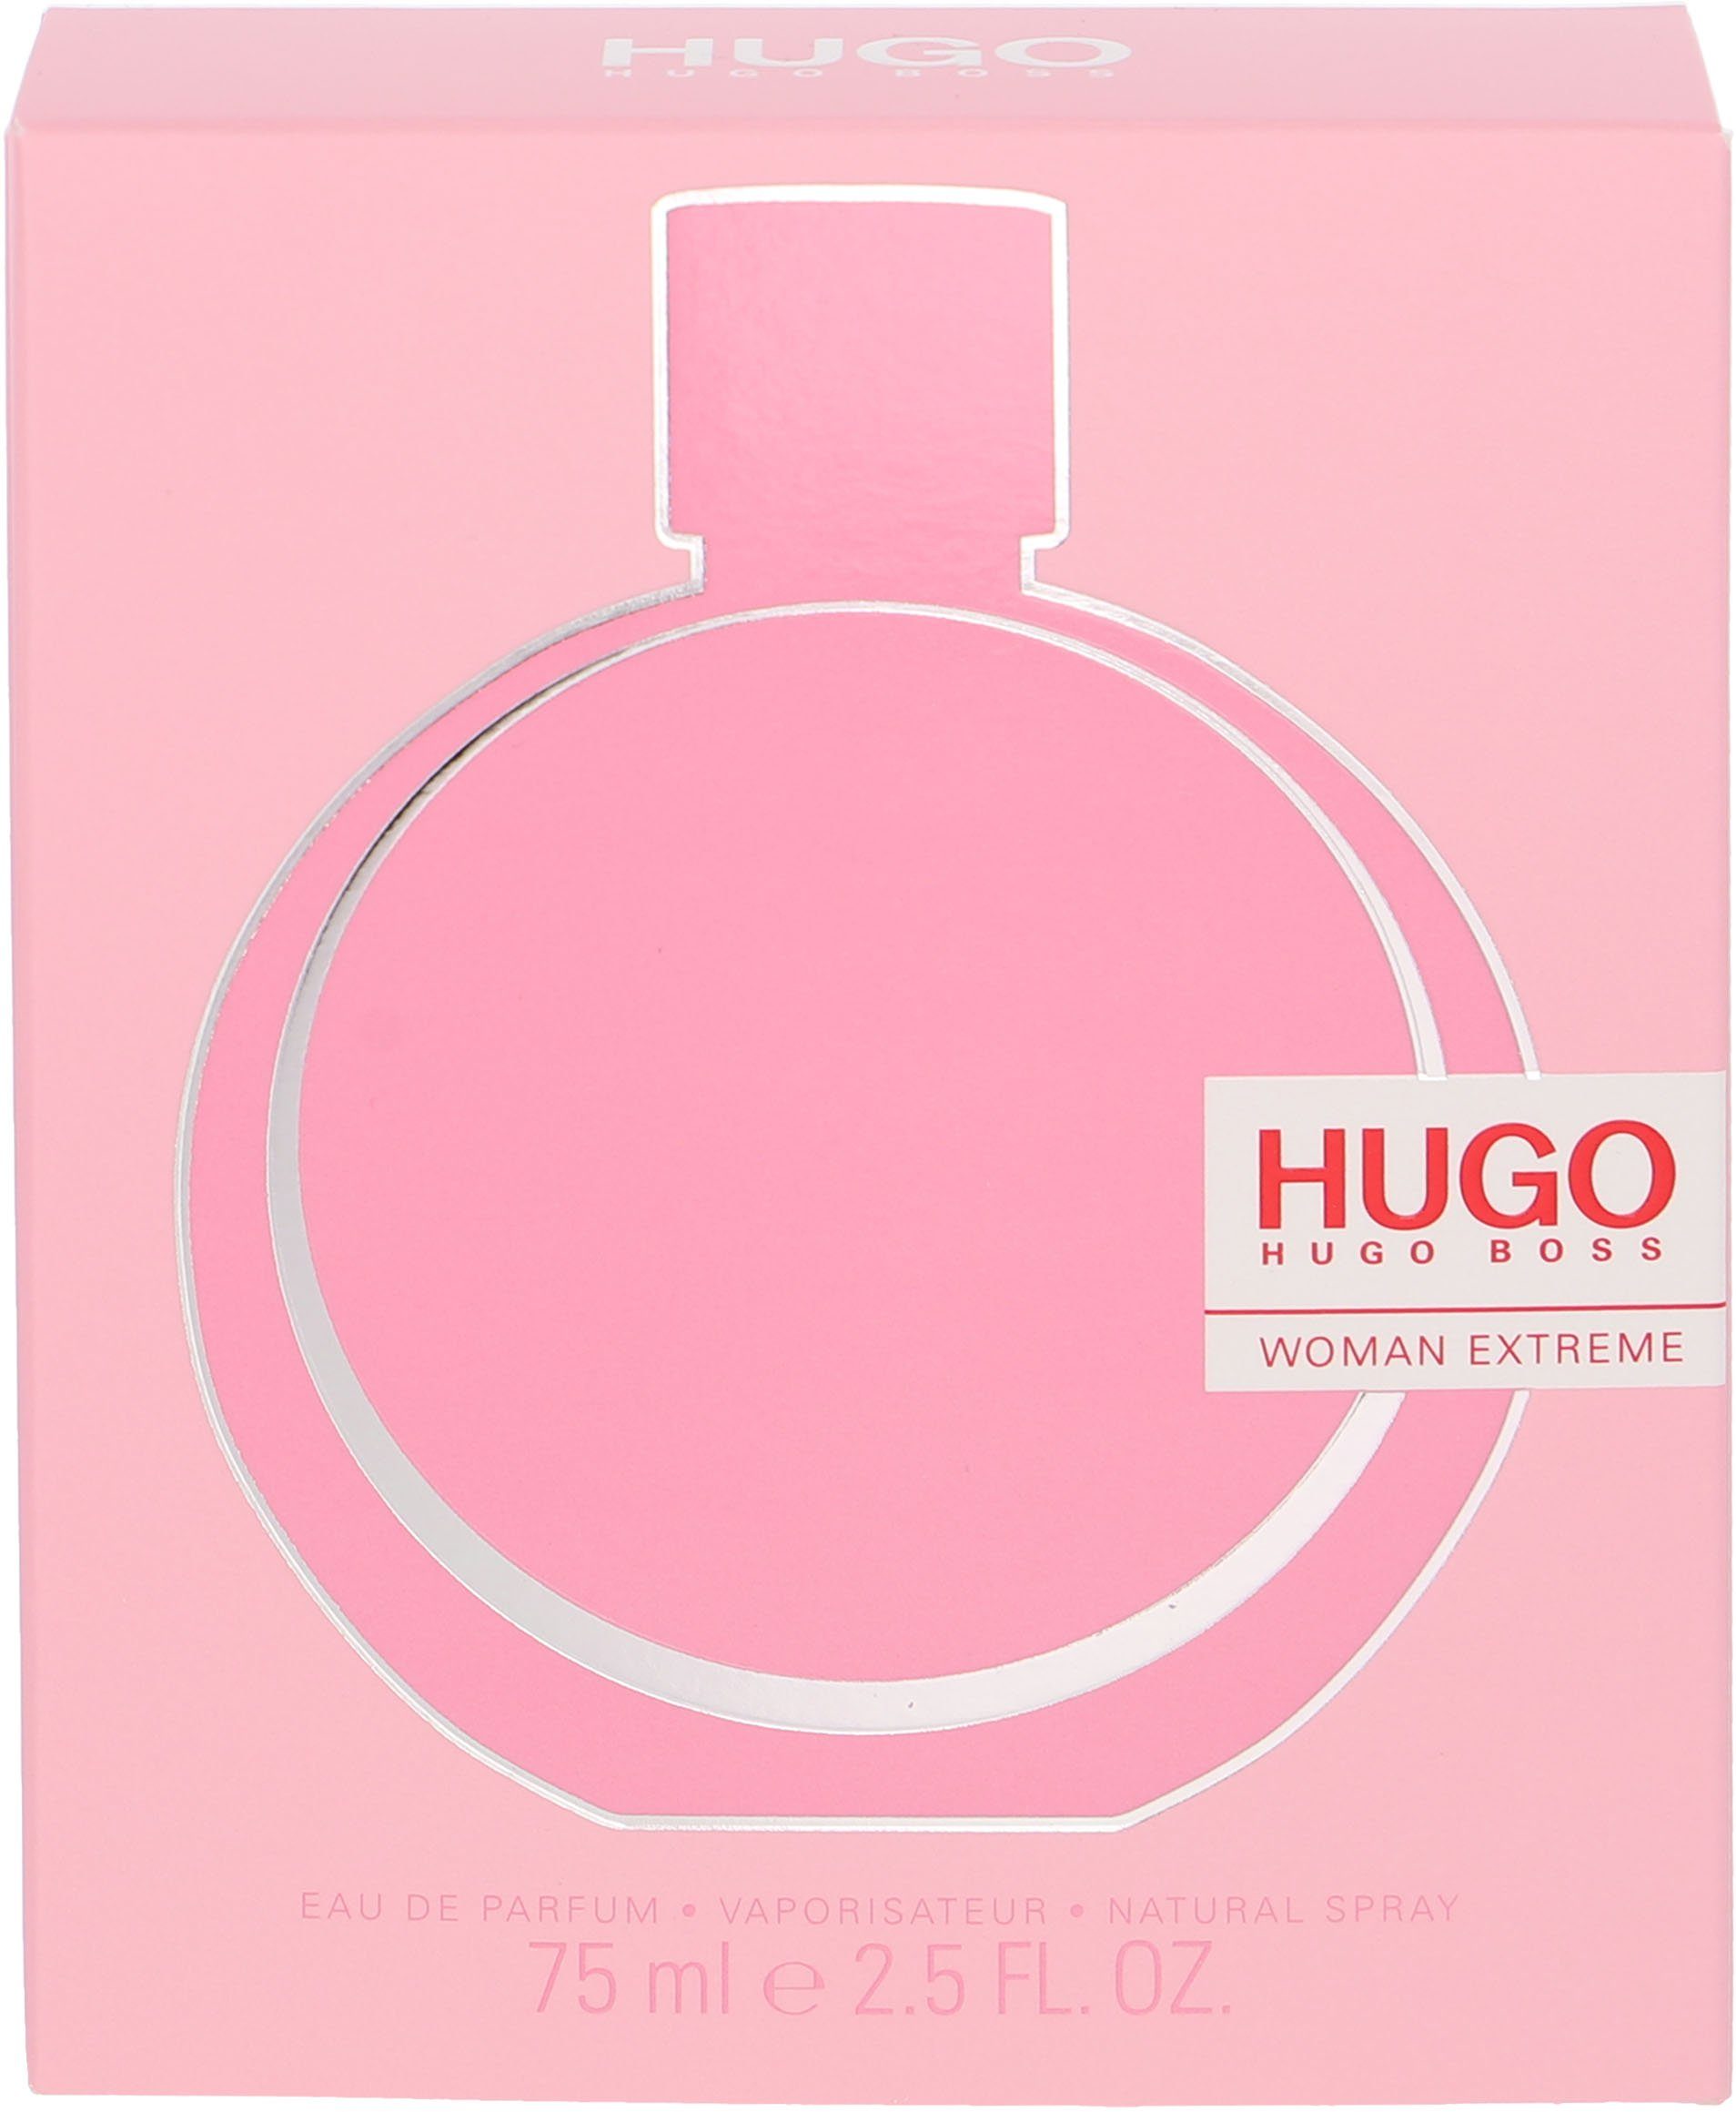 BOSS Woman Eau Parfum Extreme Hugo de